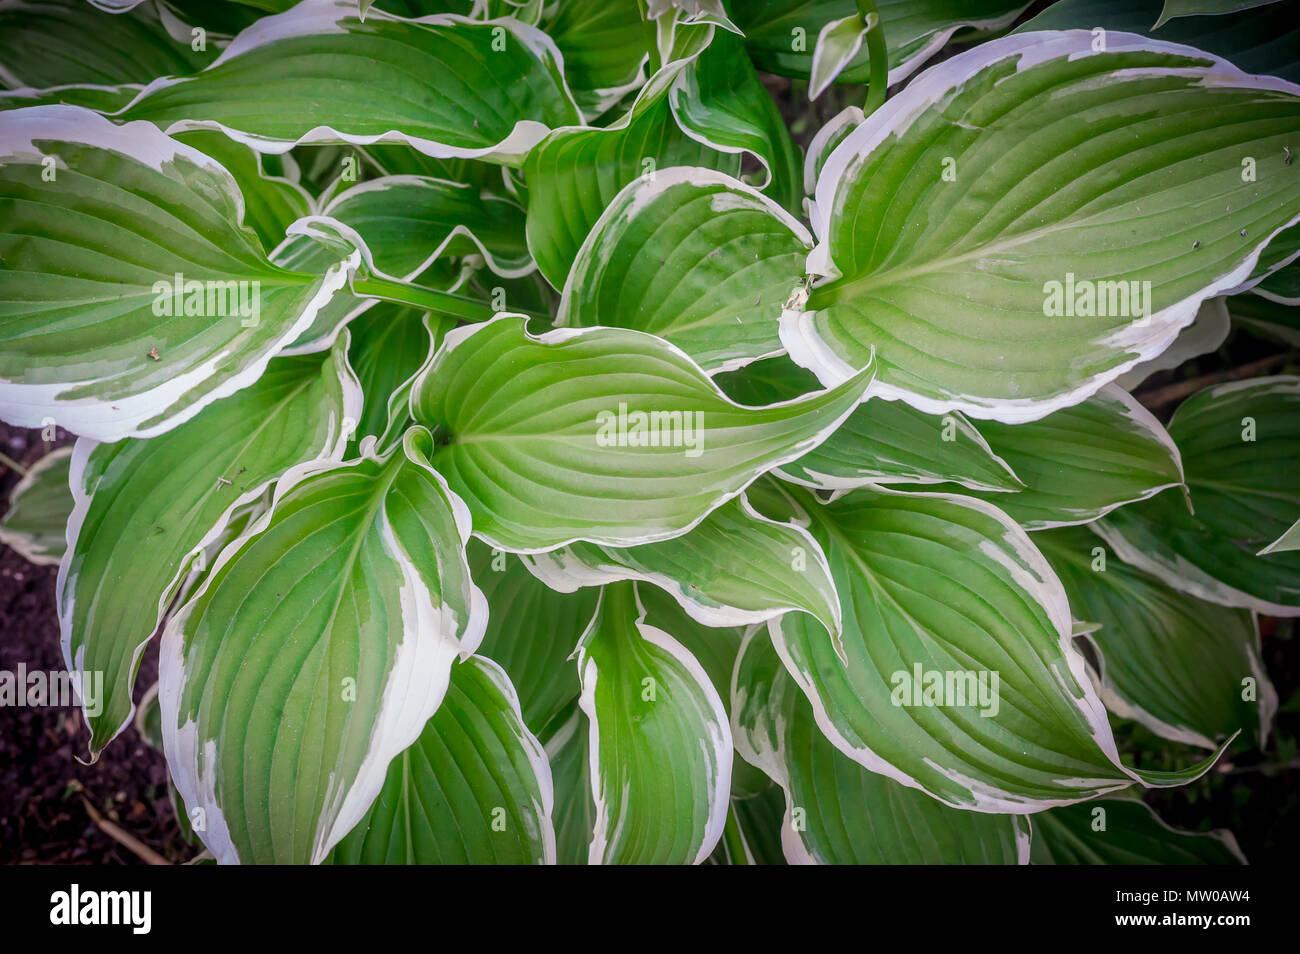 green leaf background Stock Photo